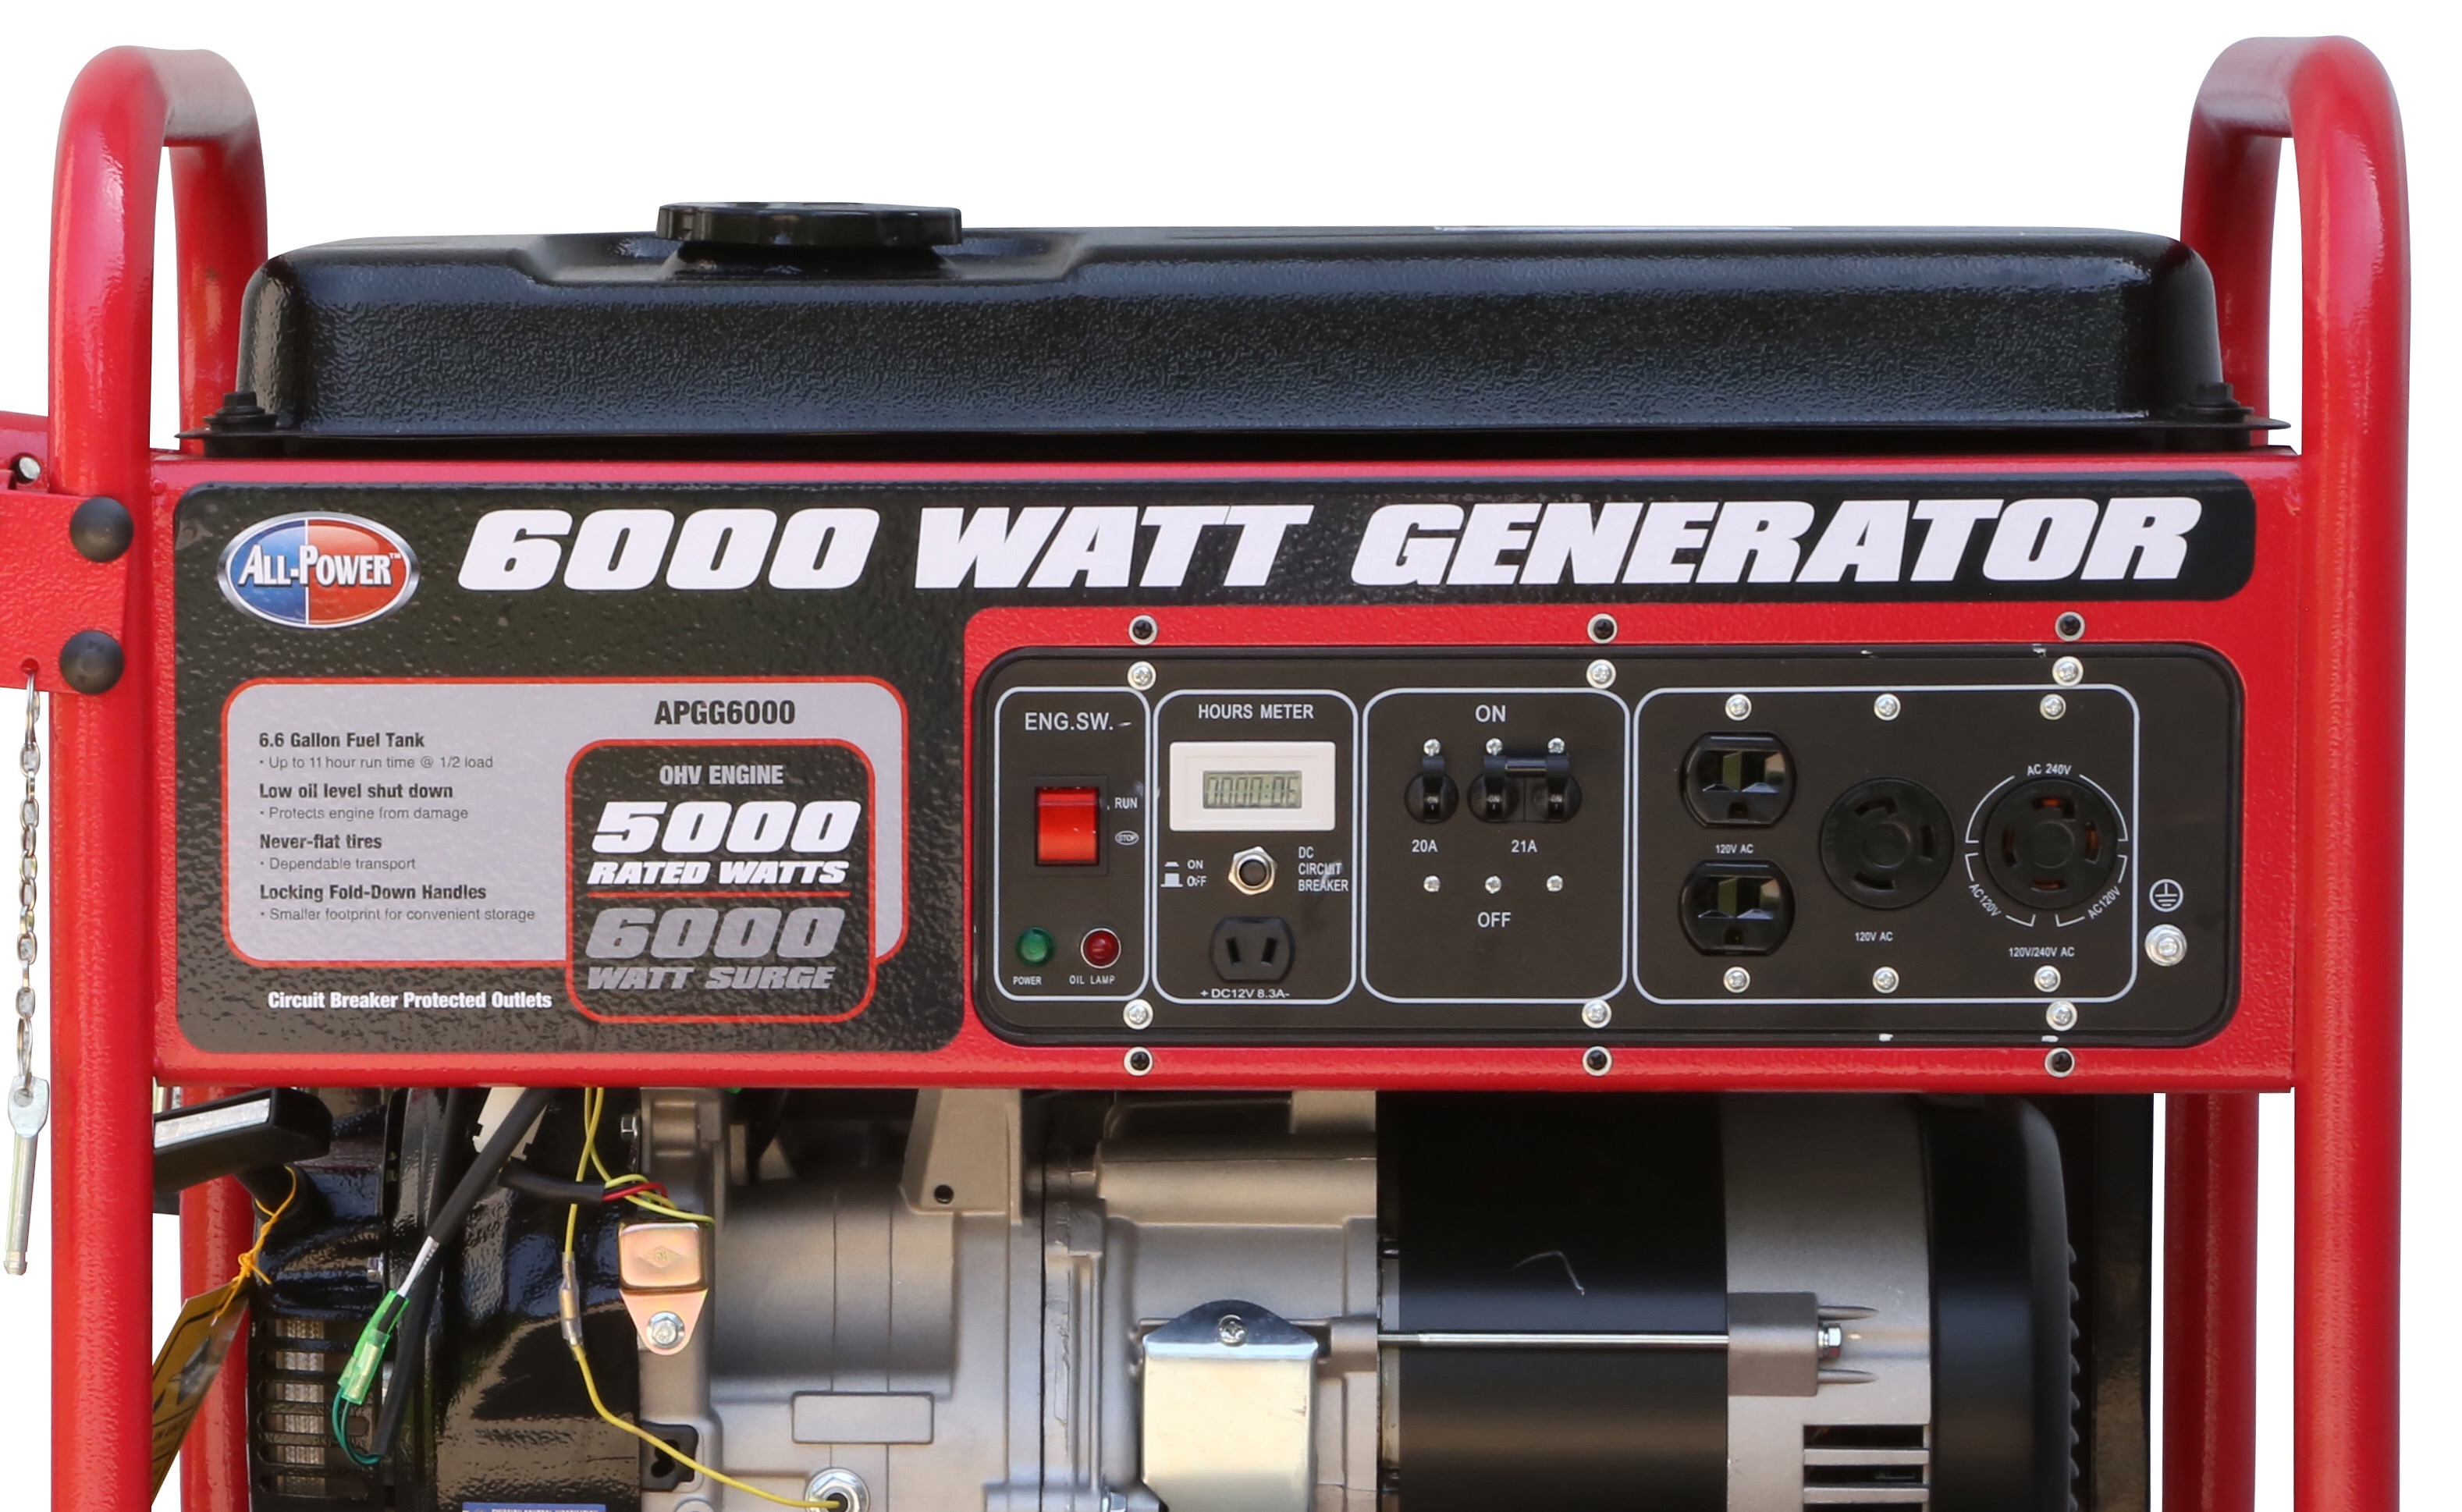 All Power 6000 Watt Generator, 6000W Gas Portable Generator for Home Use Emergency Power Backup, RV Standby, Storm Hurricane Damage Restoration Power Backup, APGG6000 - image 5 of 7